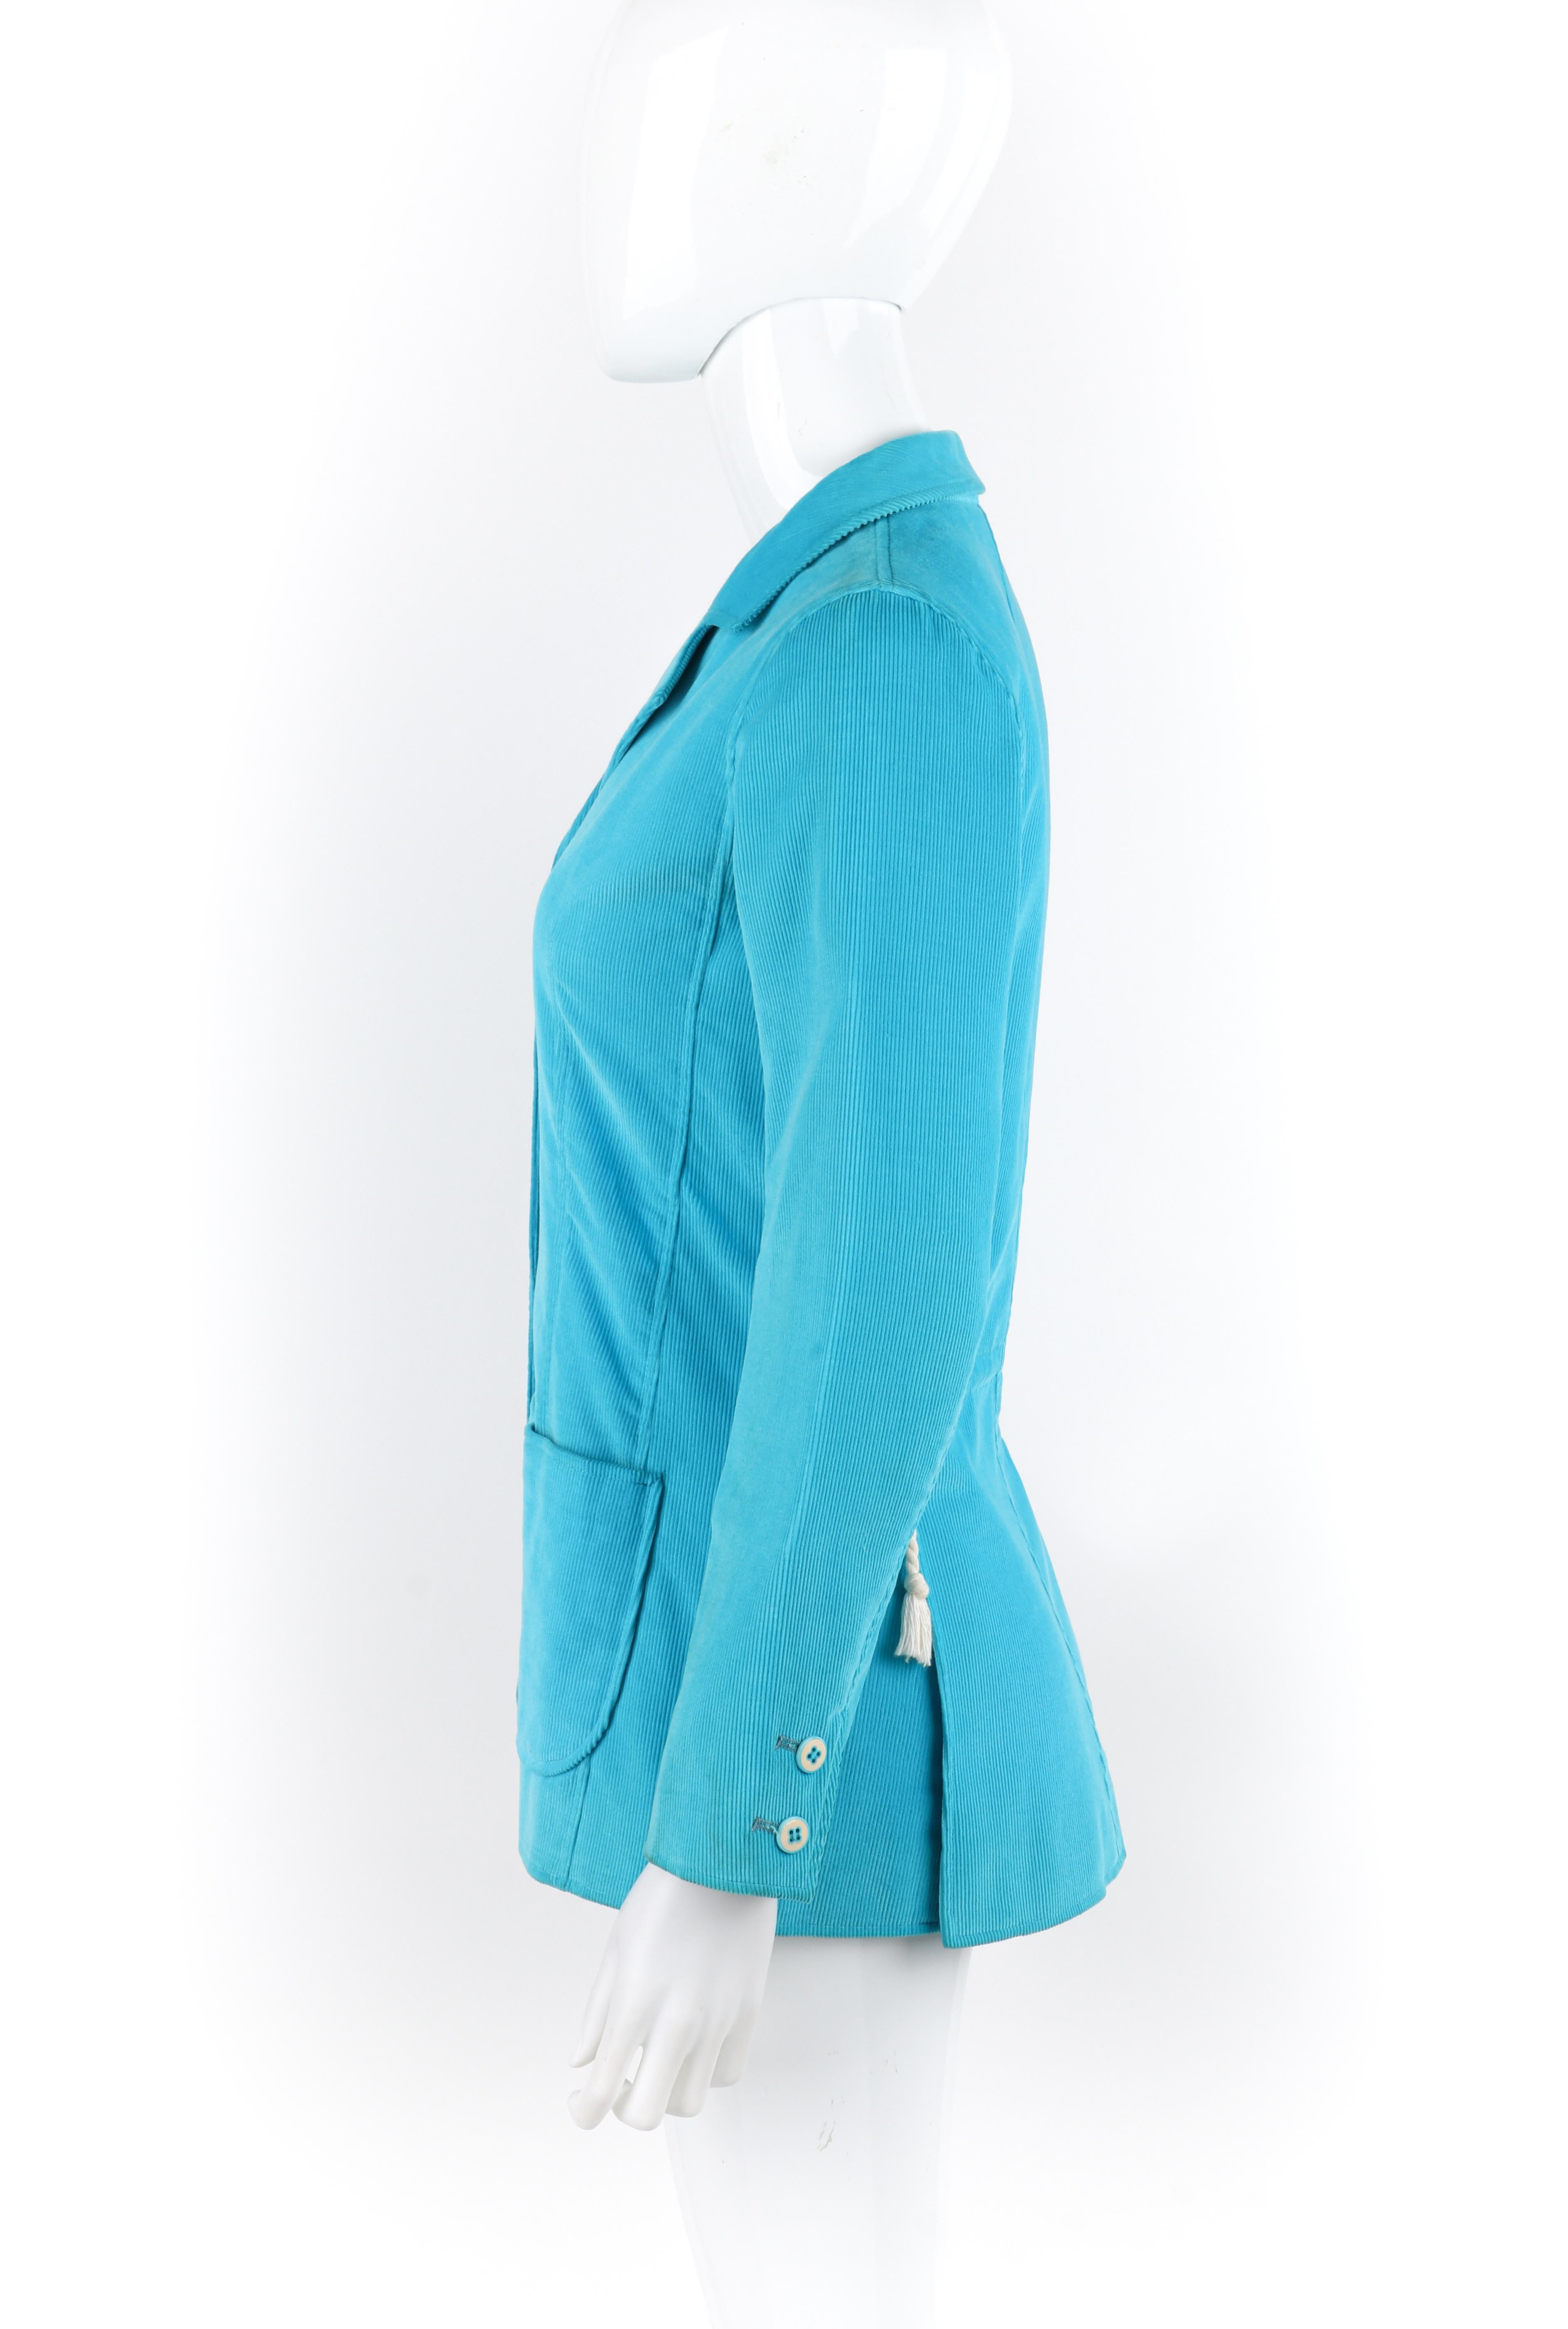 Women's COURREGES c.1970s Teal Corduroy Button-Down Collared Blazer Jacket